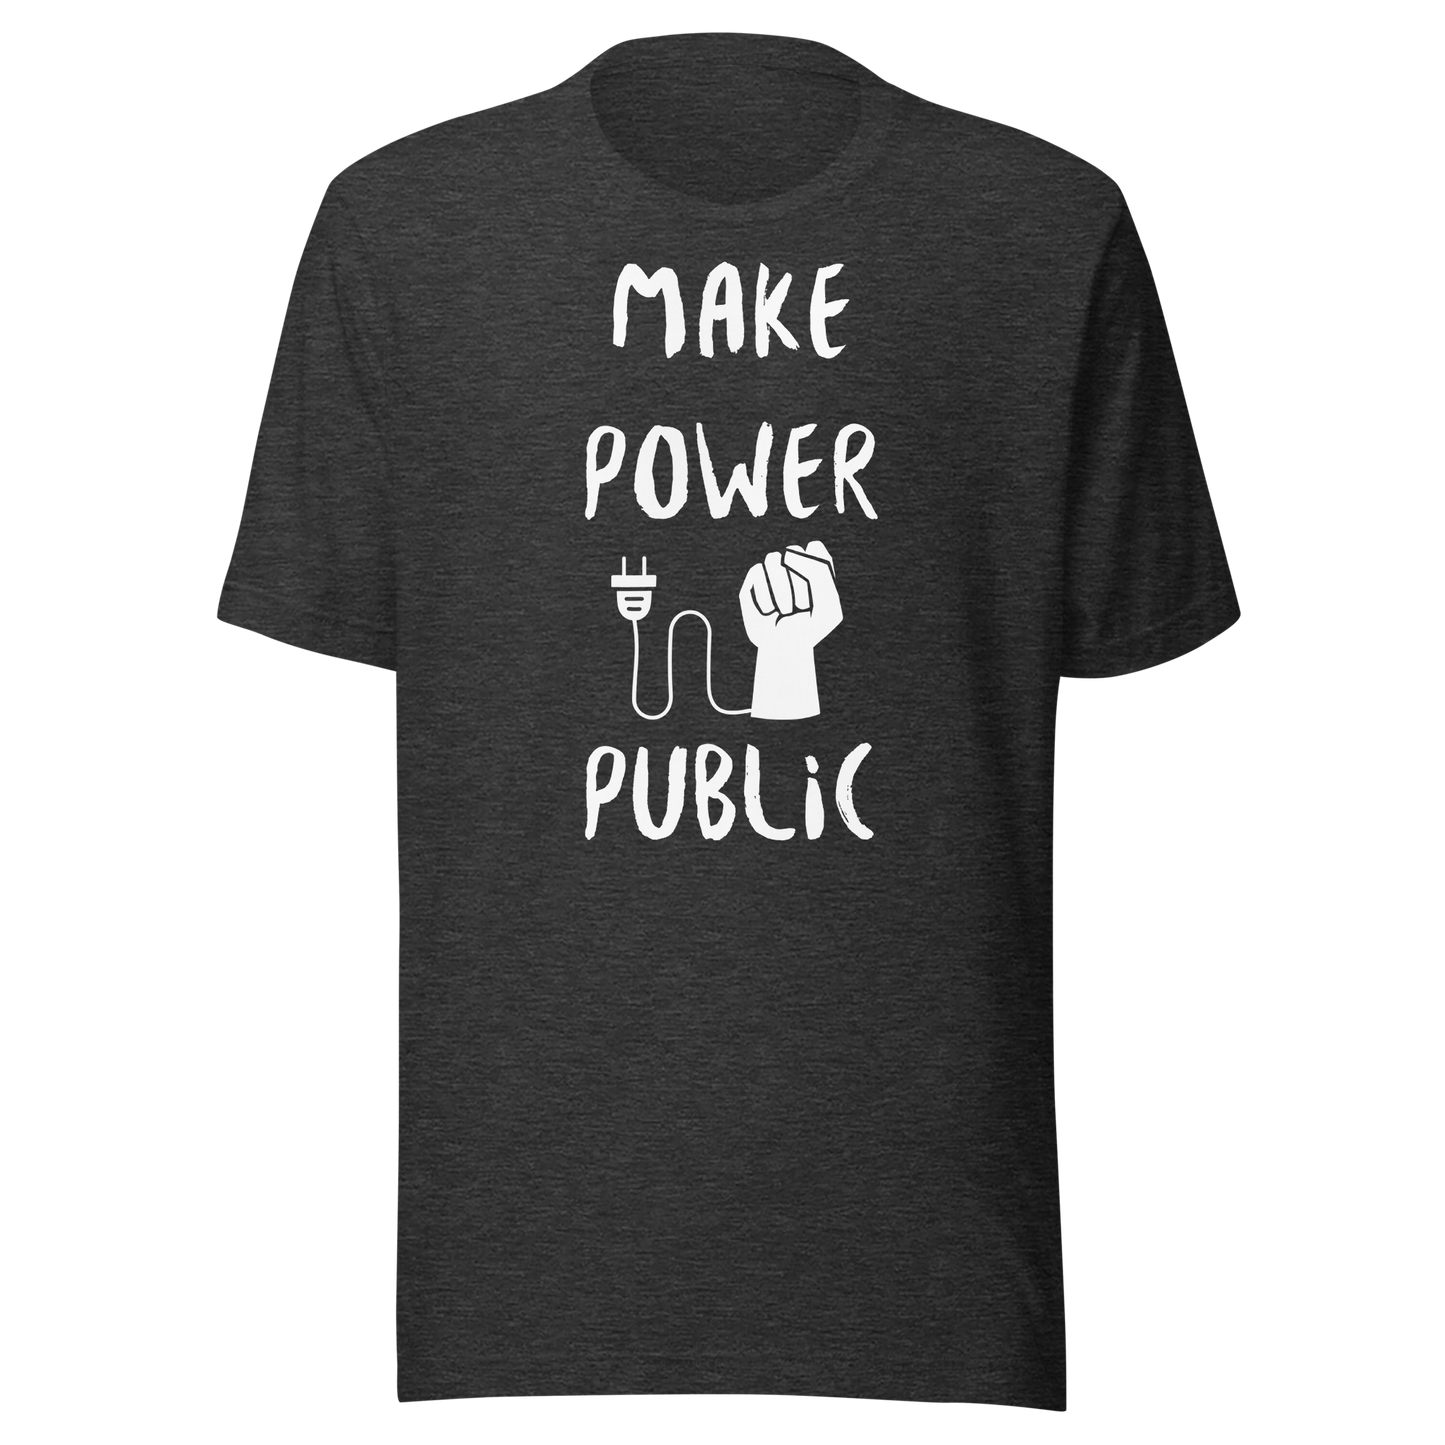 Unisex Short-Sleeve Top: Public Power